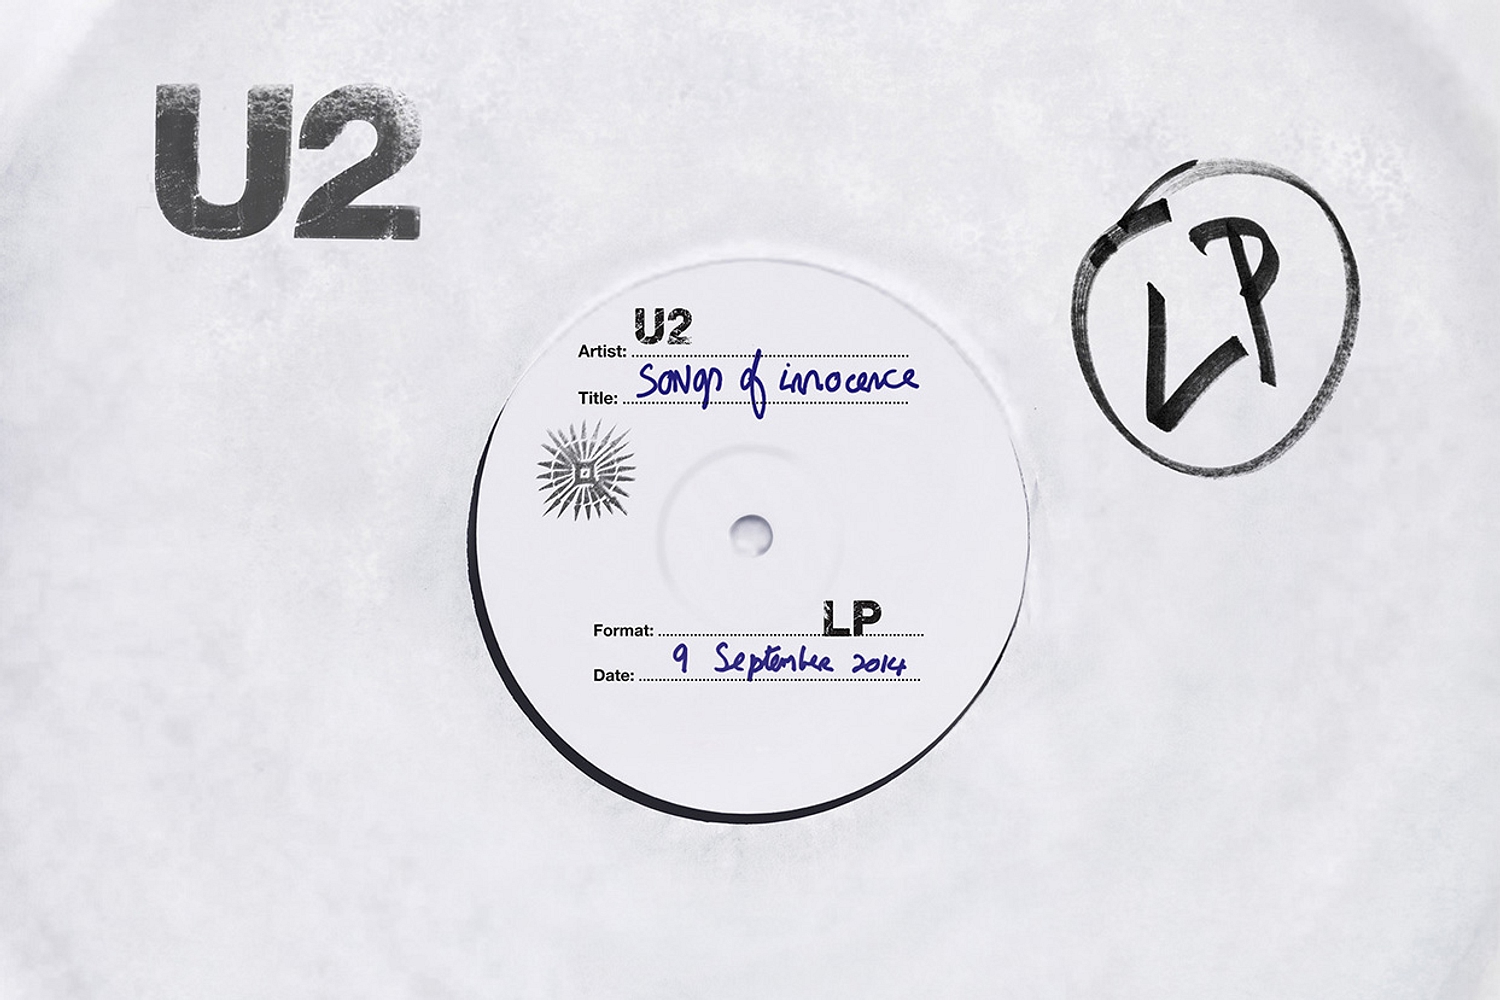 33 million people have ‘accessed’ U2’s free album, according to Apple